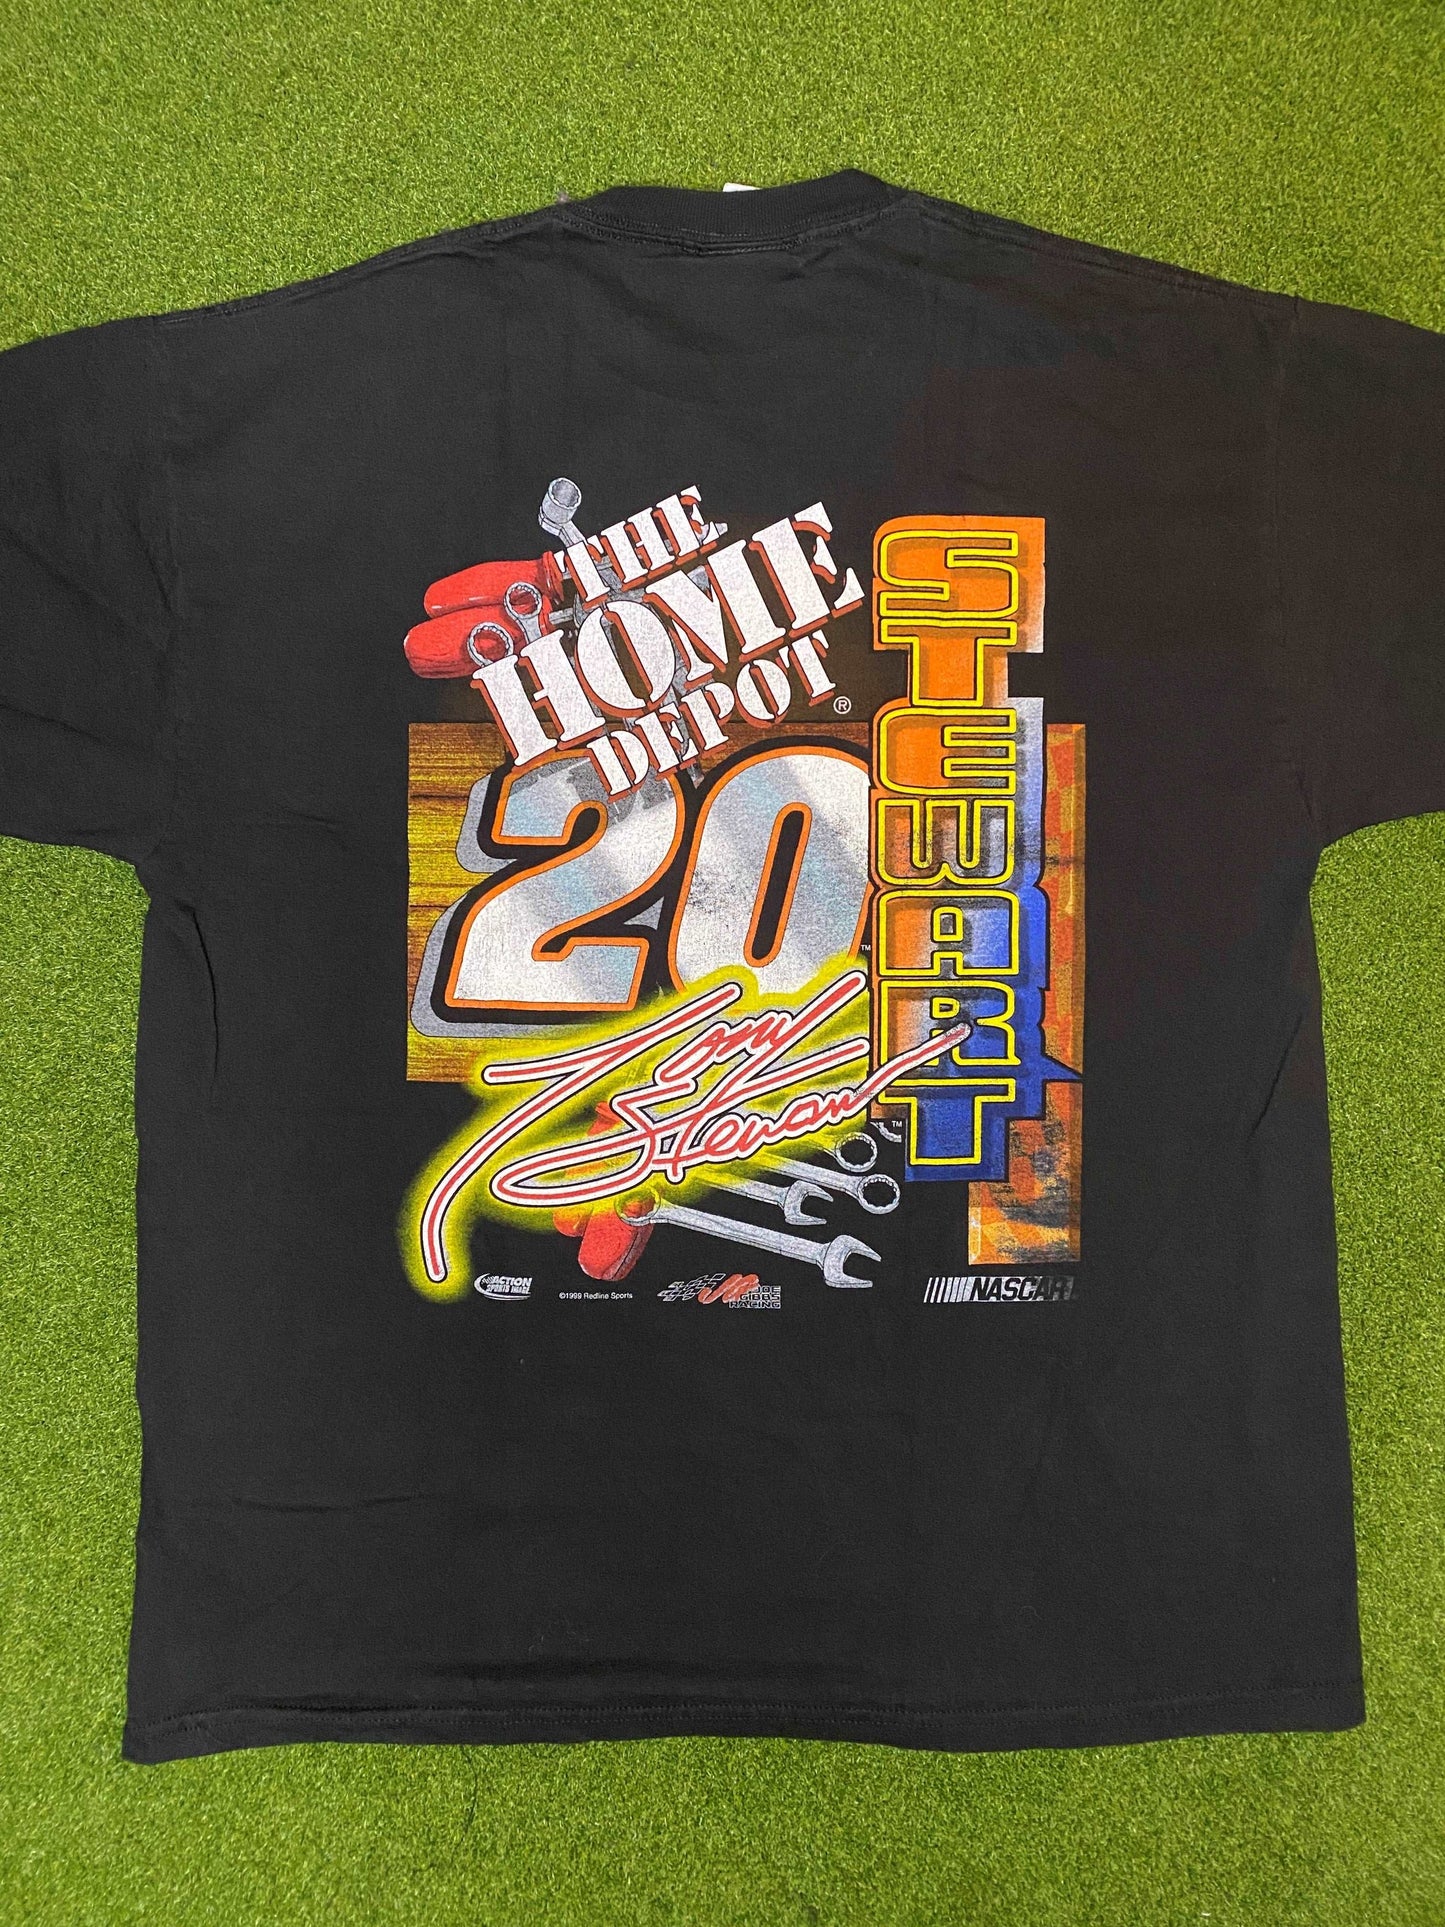 1999 Tony Stewart - Double Sided - Home Depot - Vintage NASCAR Tee Shirt (Large)